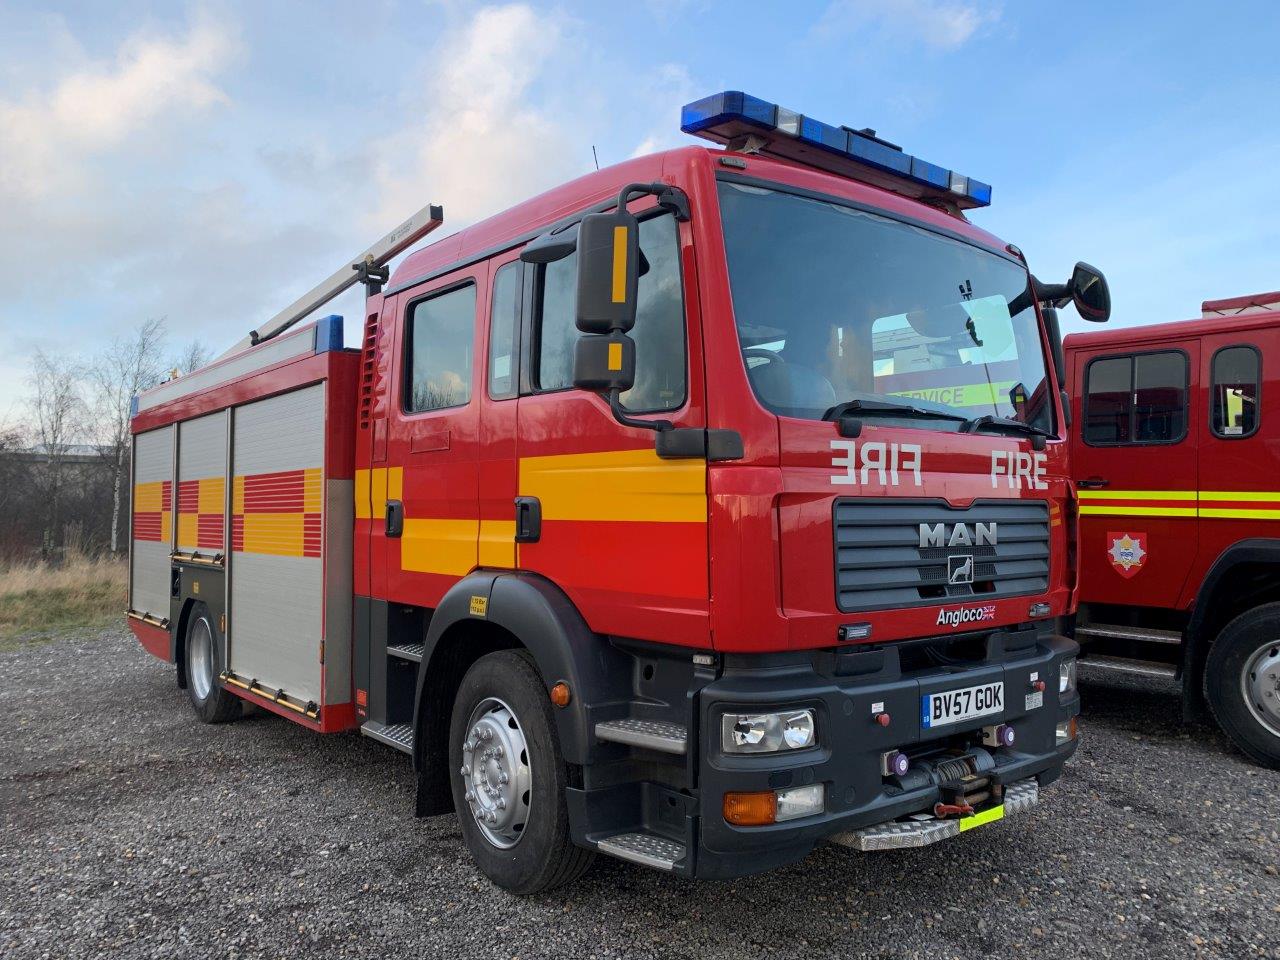 MAN TGM 18.240 WrL (Fire Engine) - Govsales of ex military vehicles for sale, mod surplus